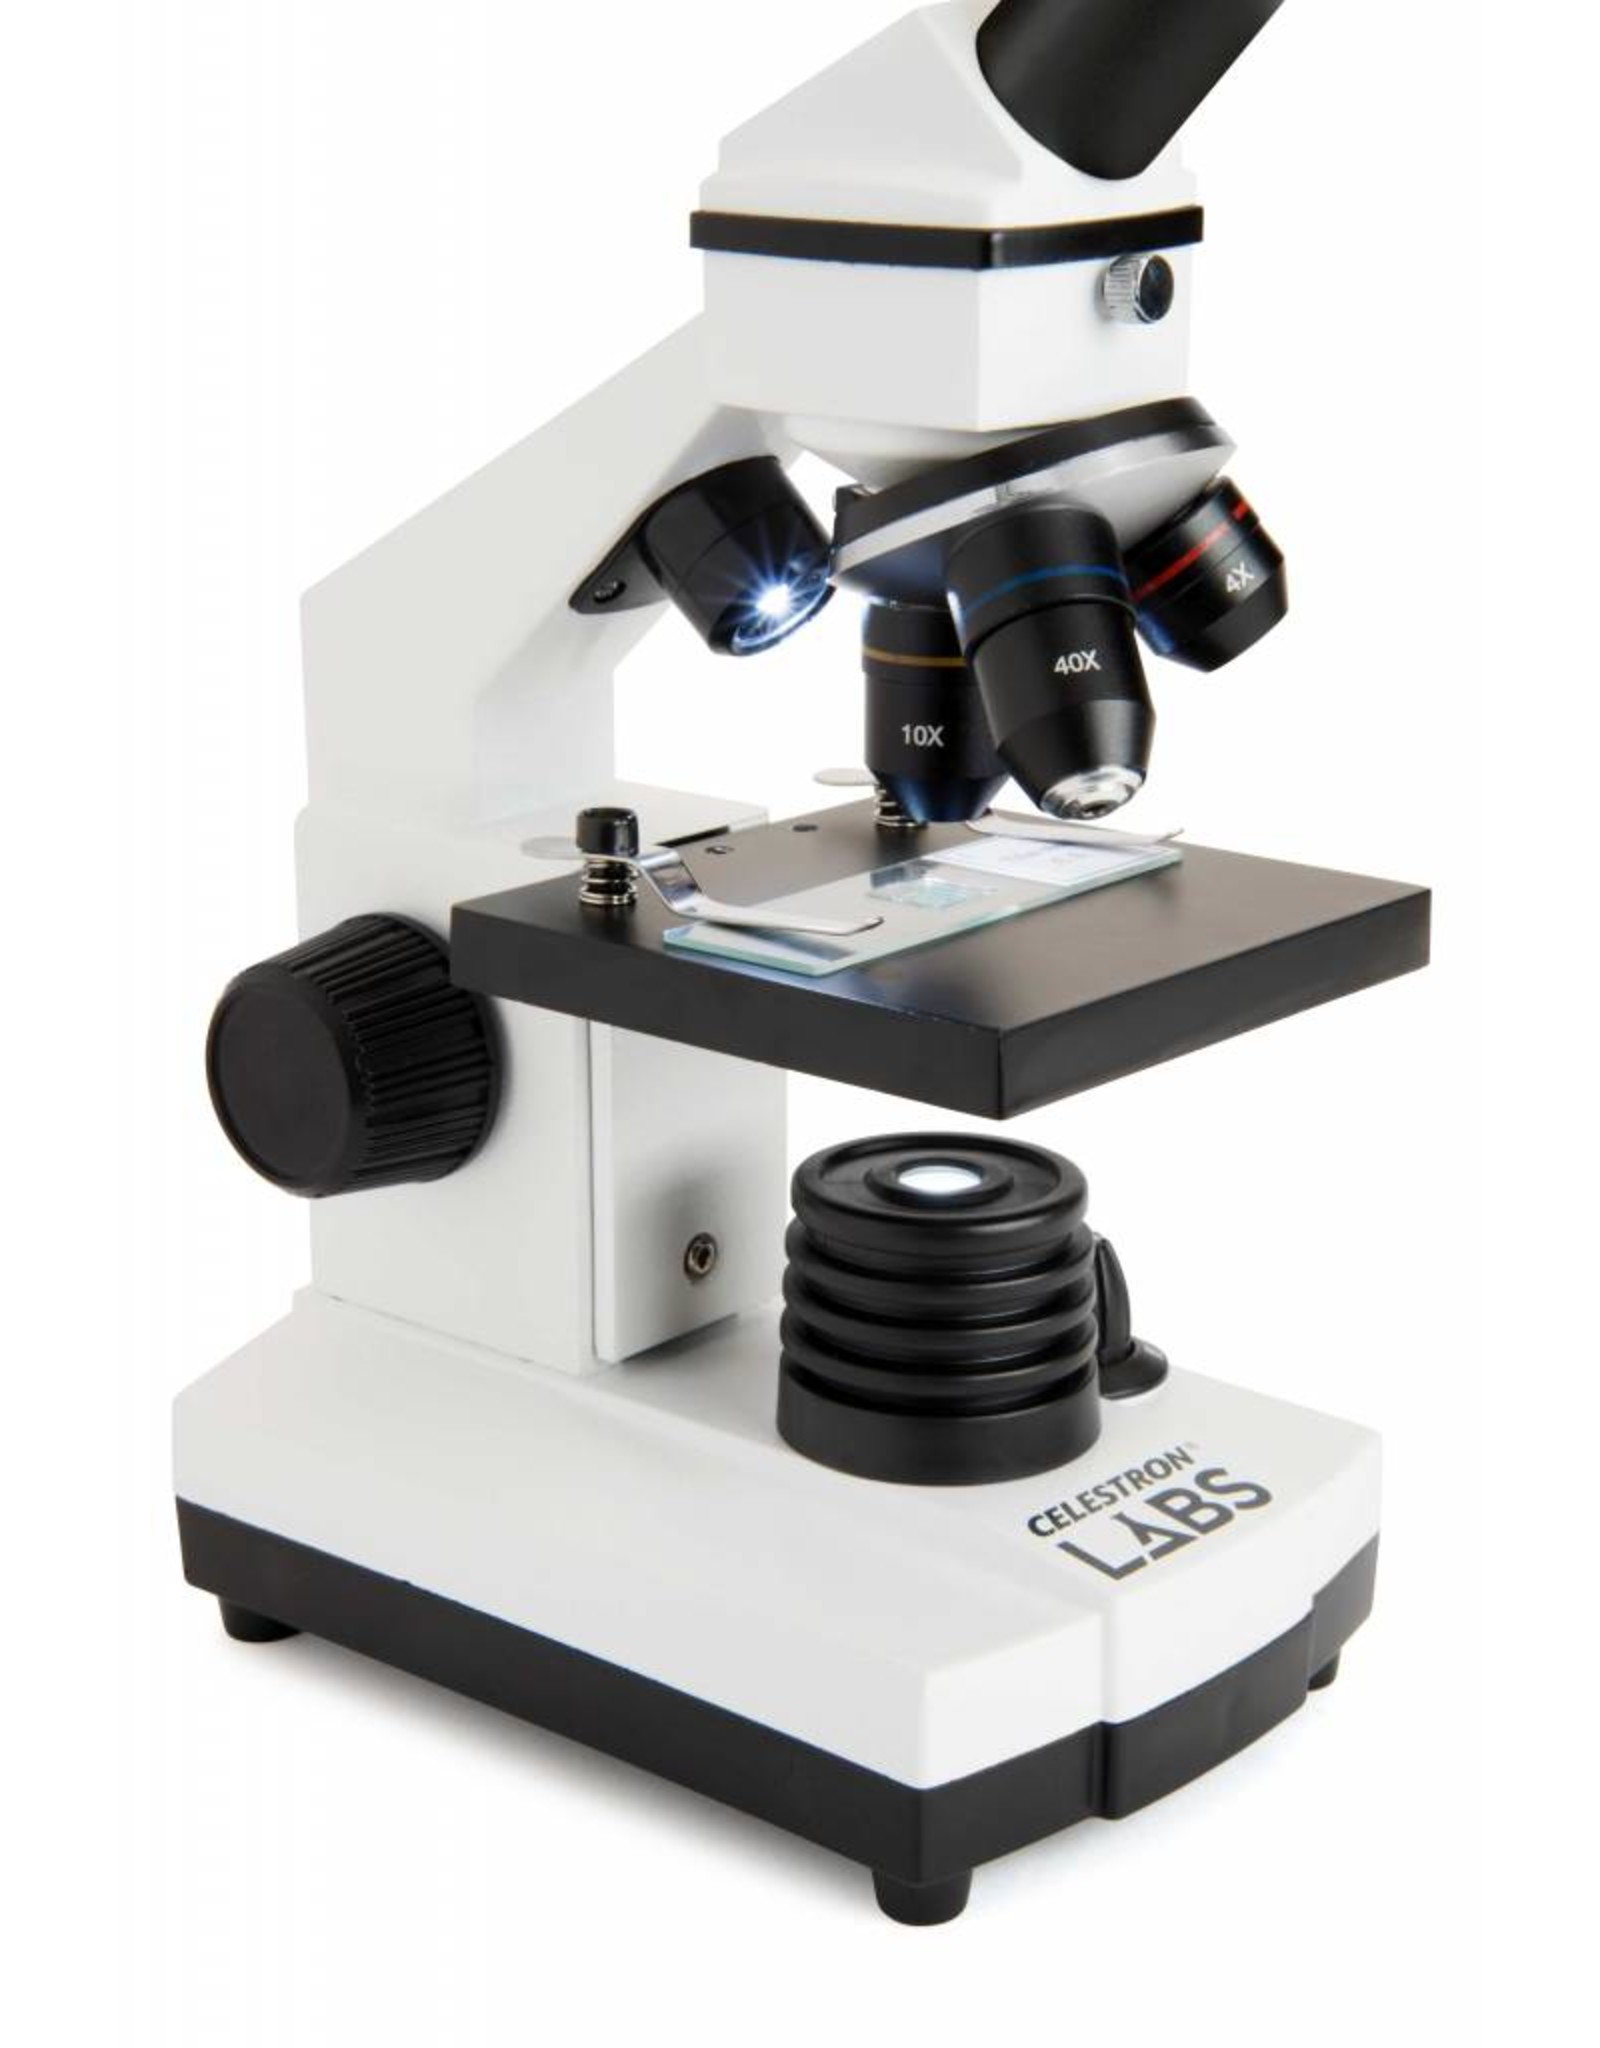 Celestron Celestron Labs CM800 Compound Microscope